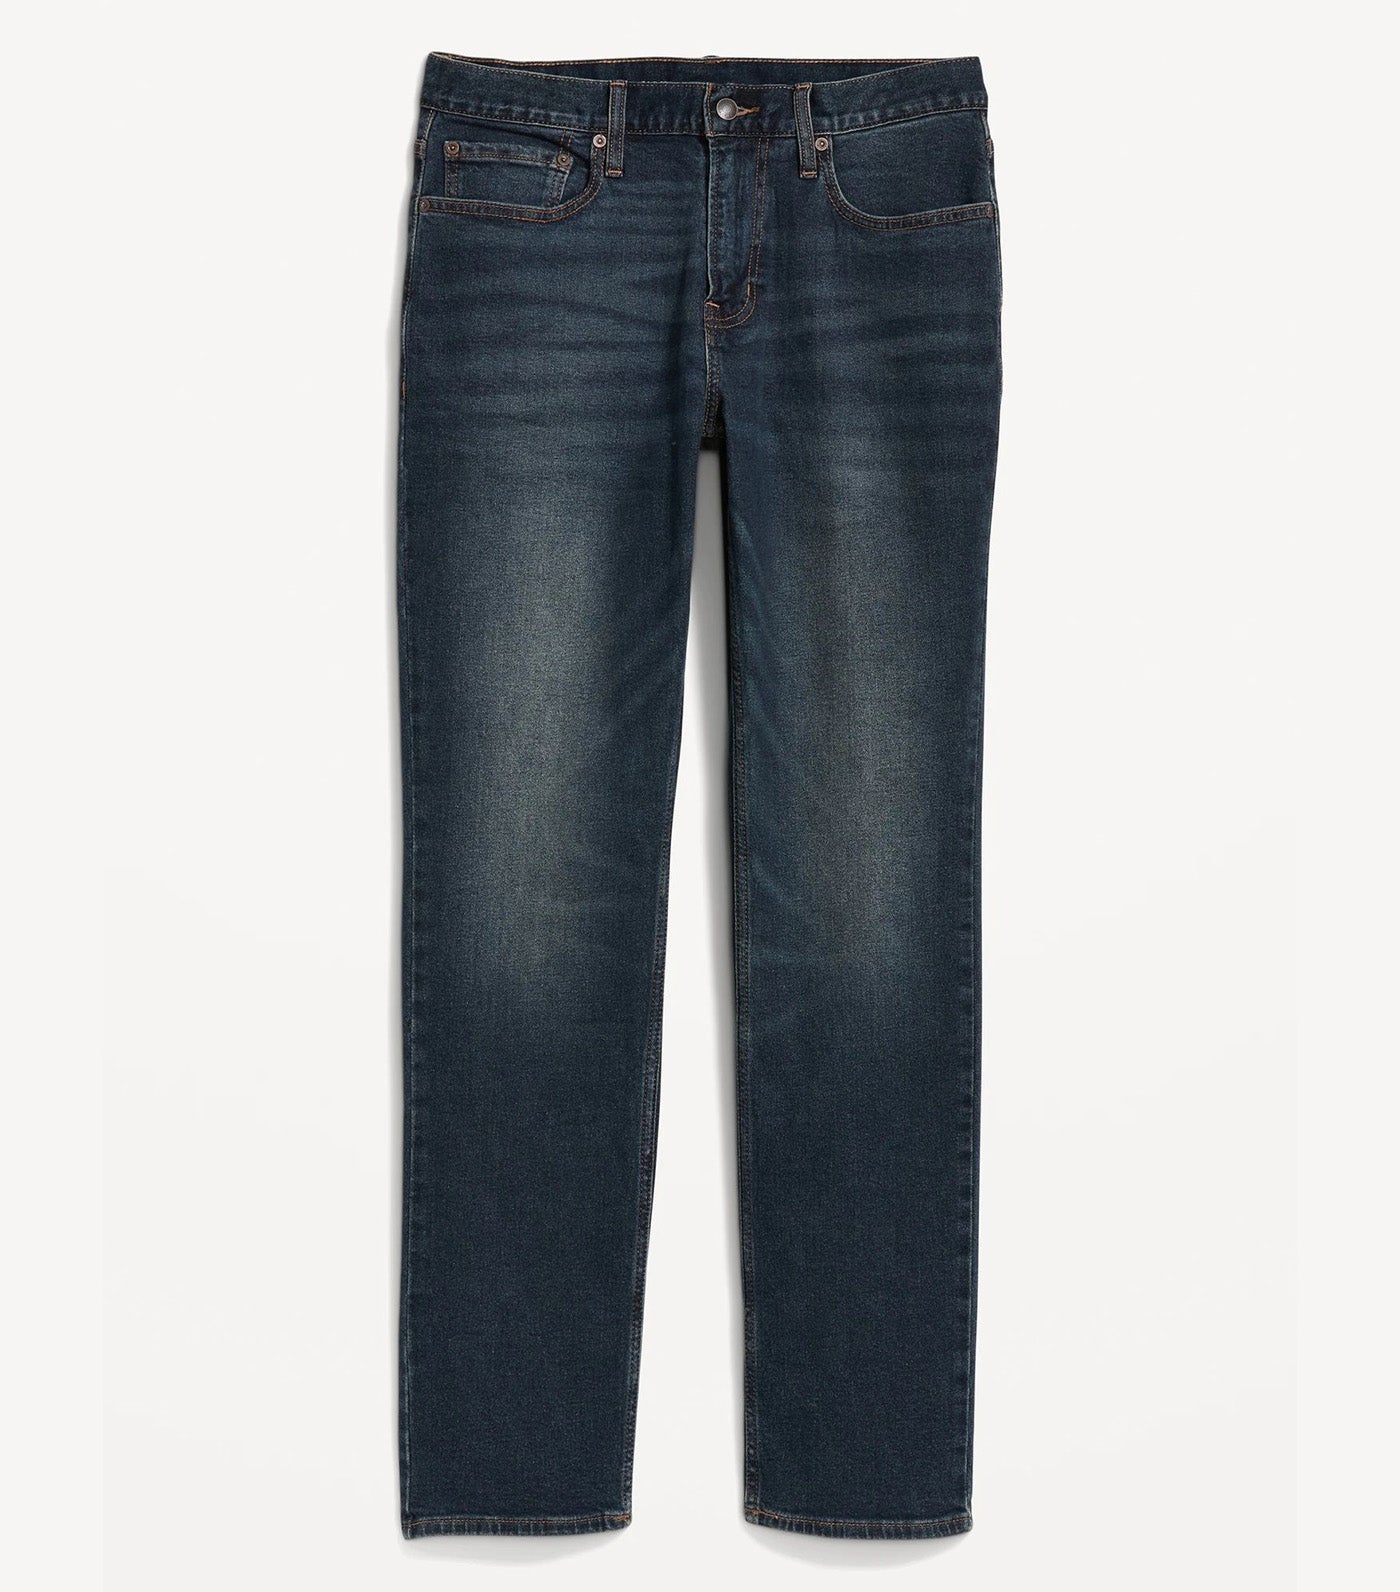 Straight Built-In Flex Jeans for Men Dark Wash